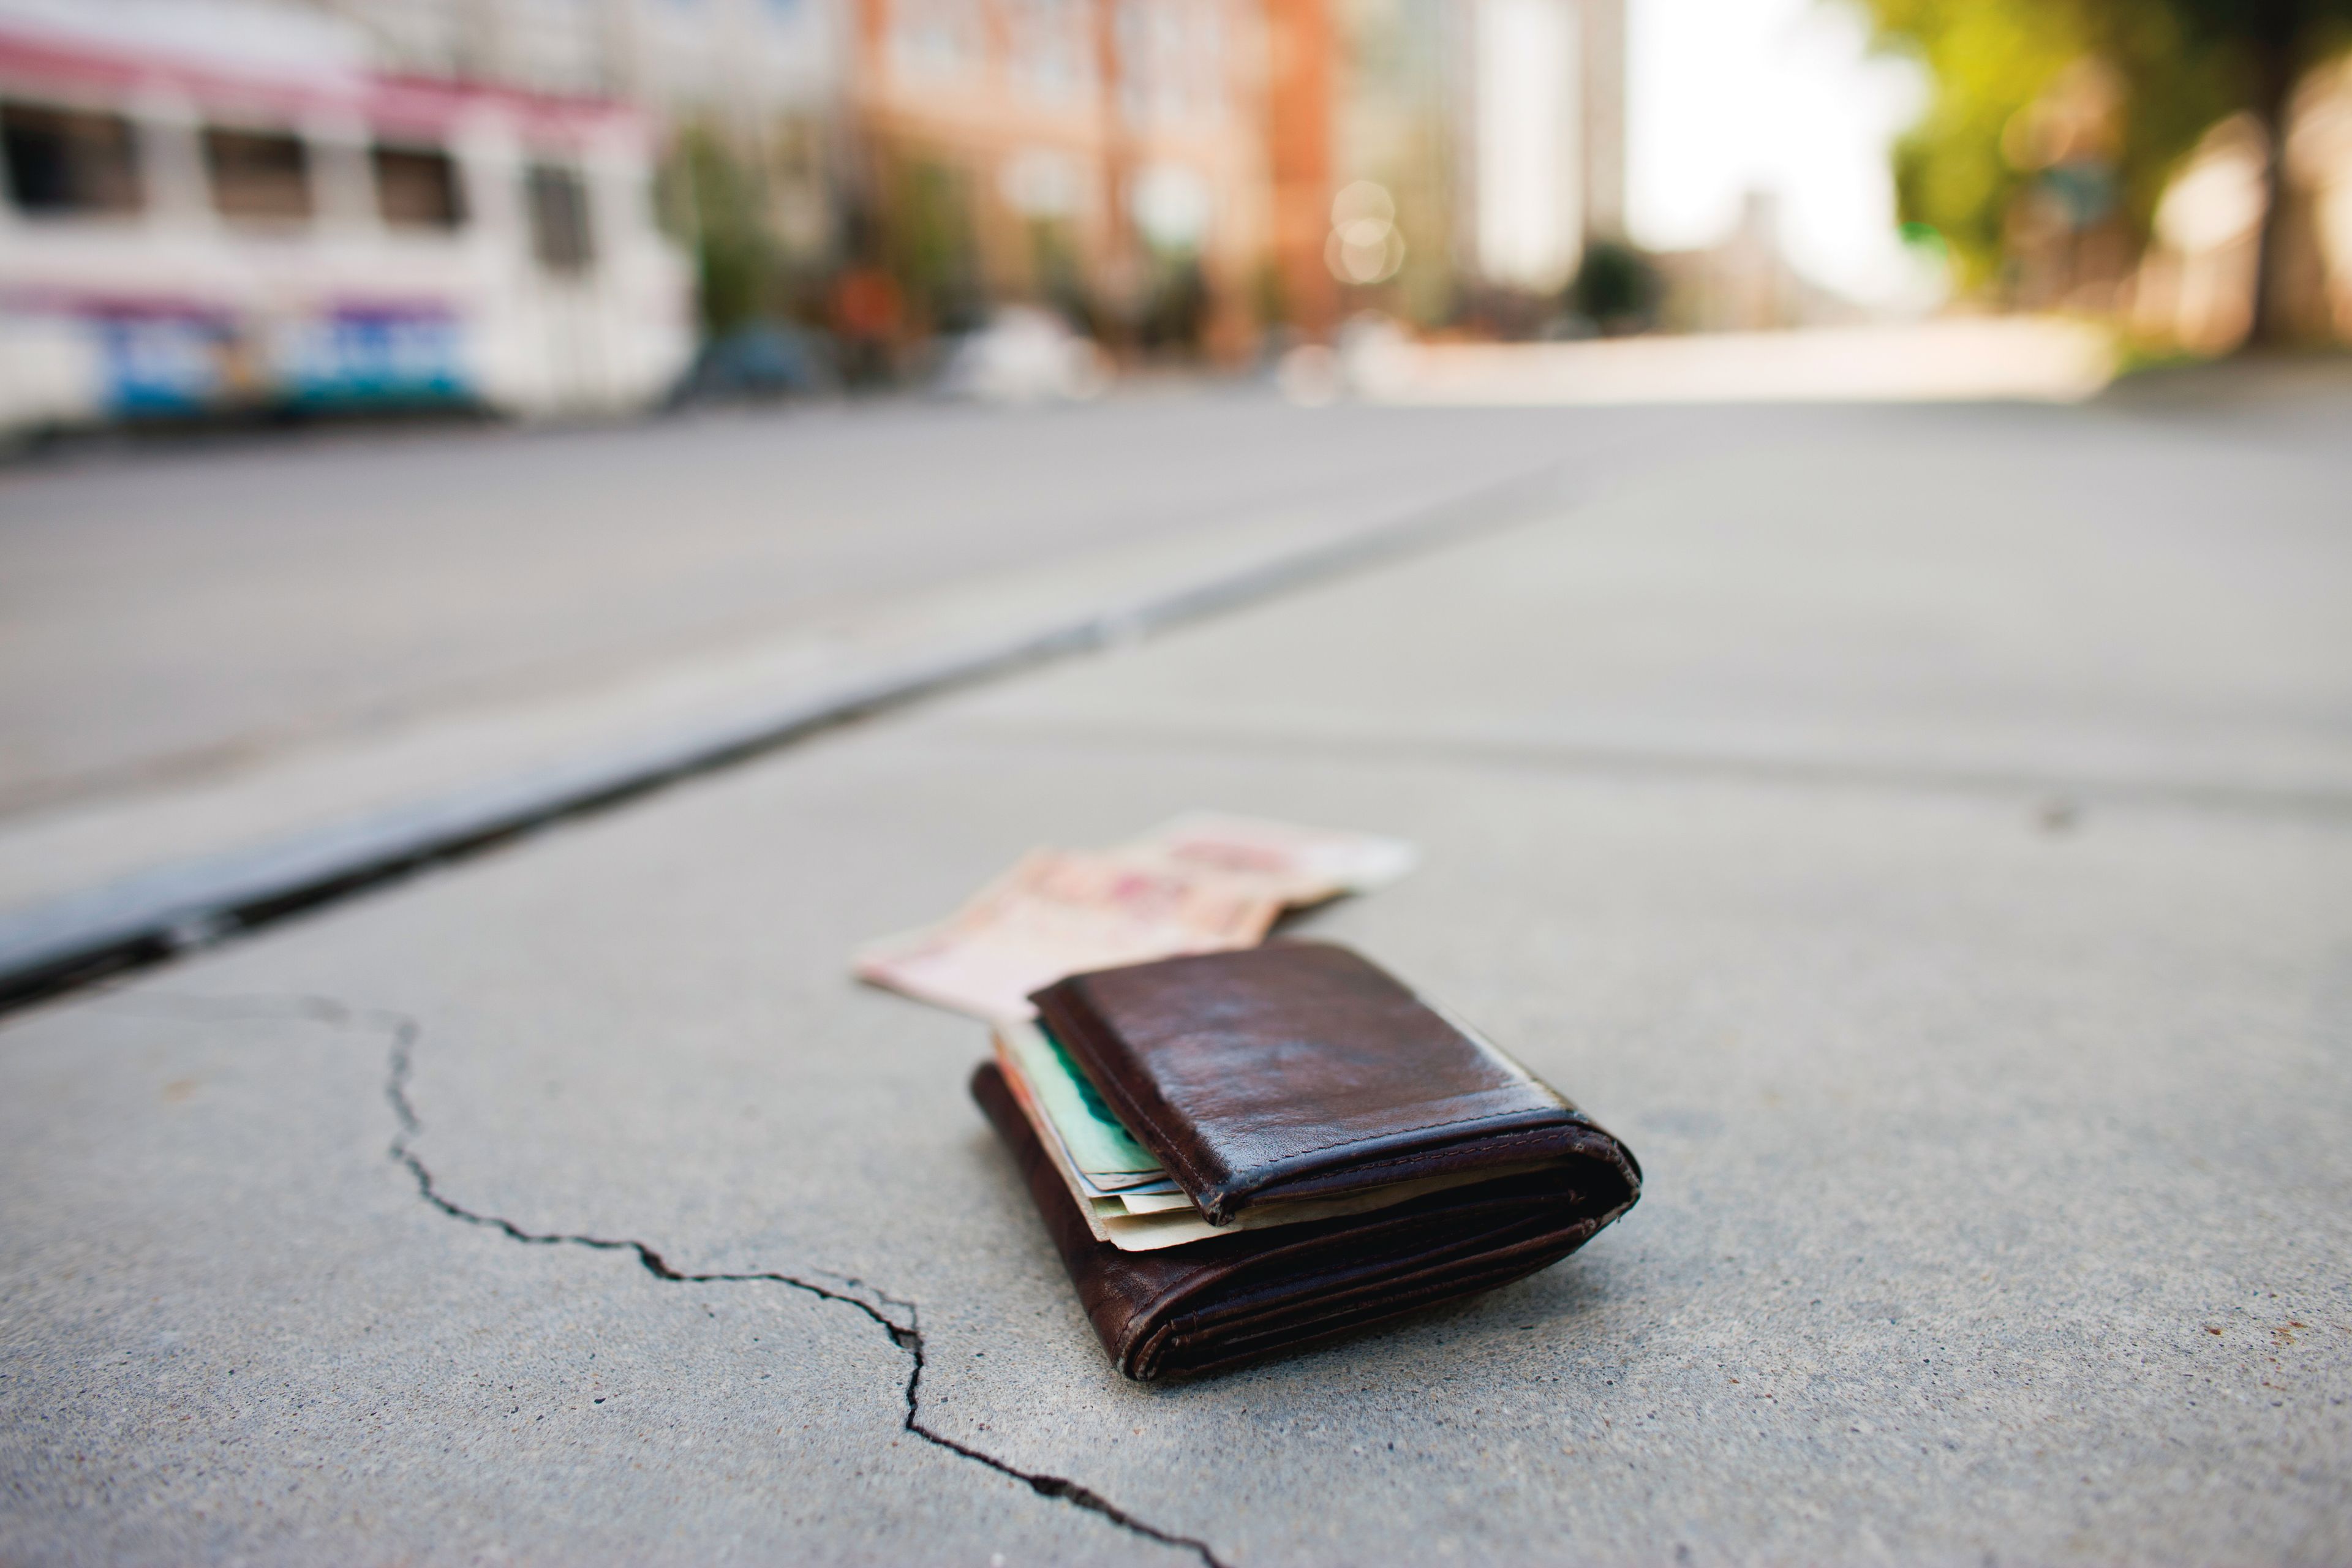 A man’s wallet lying on the sidewalk.